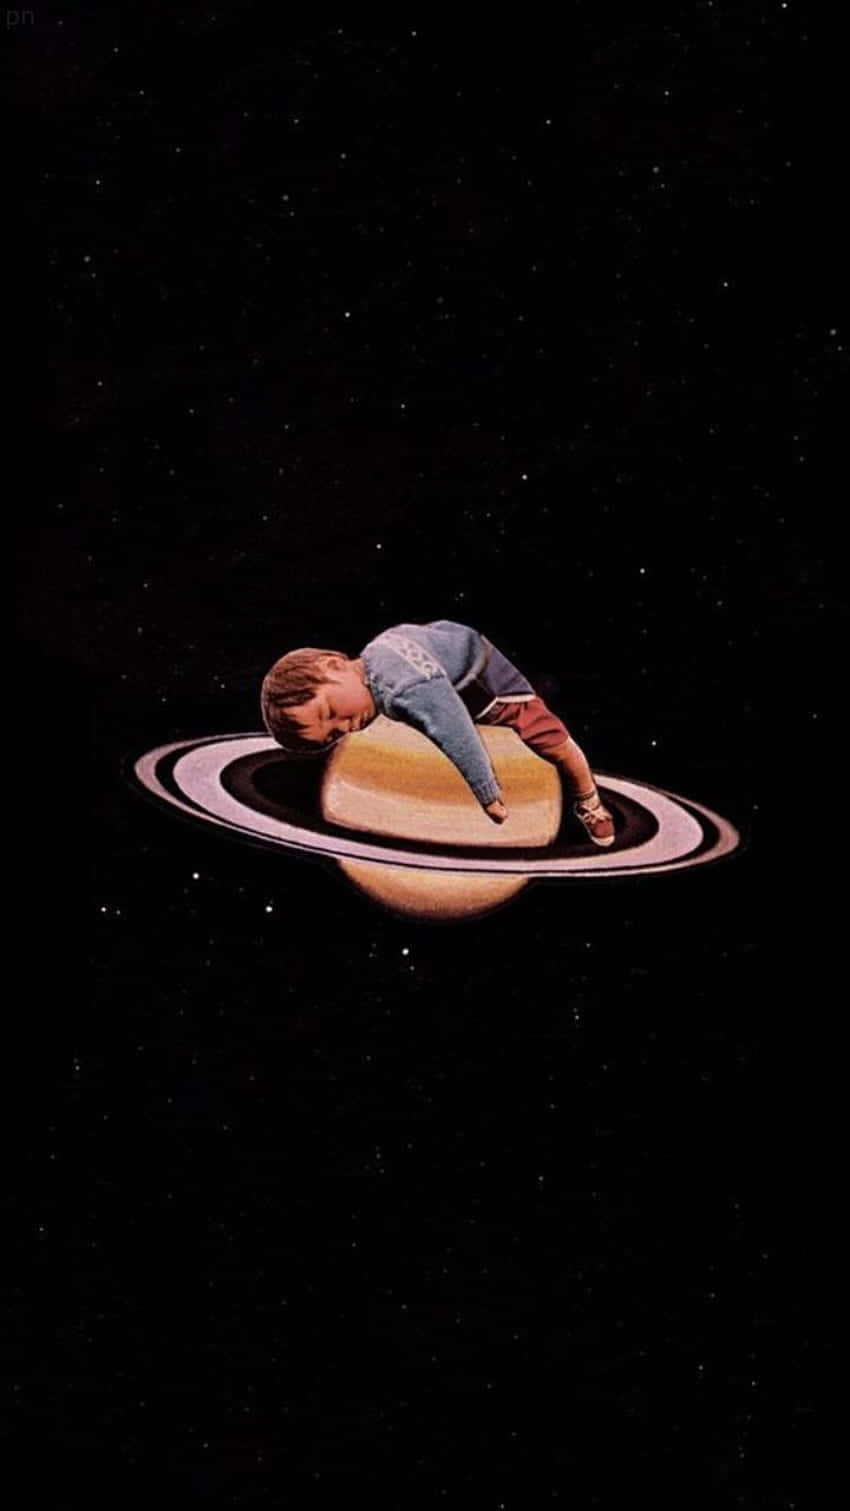 Dreamy Space Child Restingon Saturn Ring Wallpaper